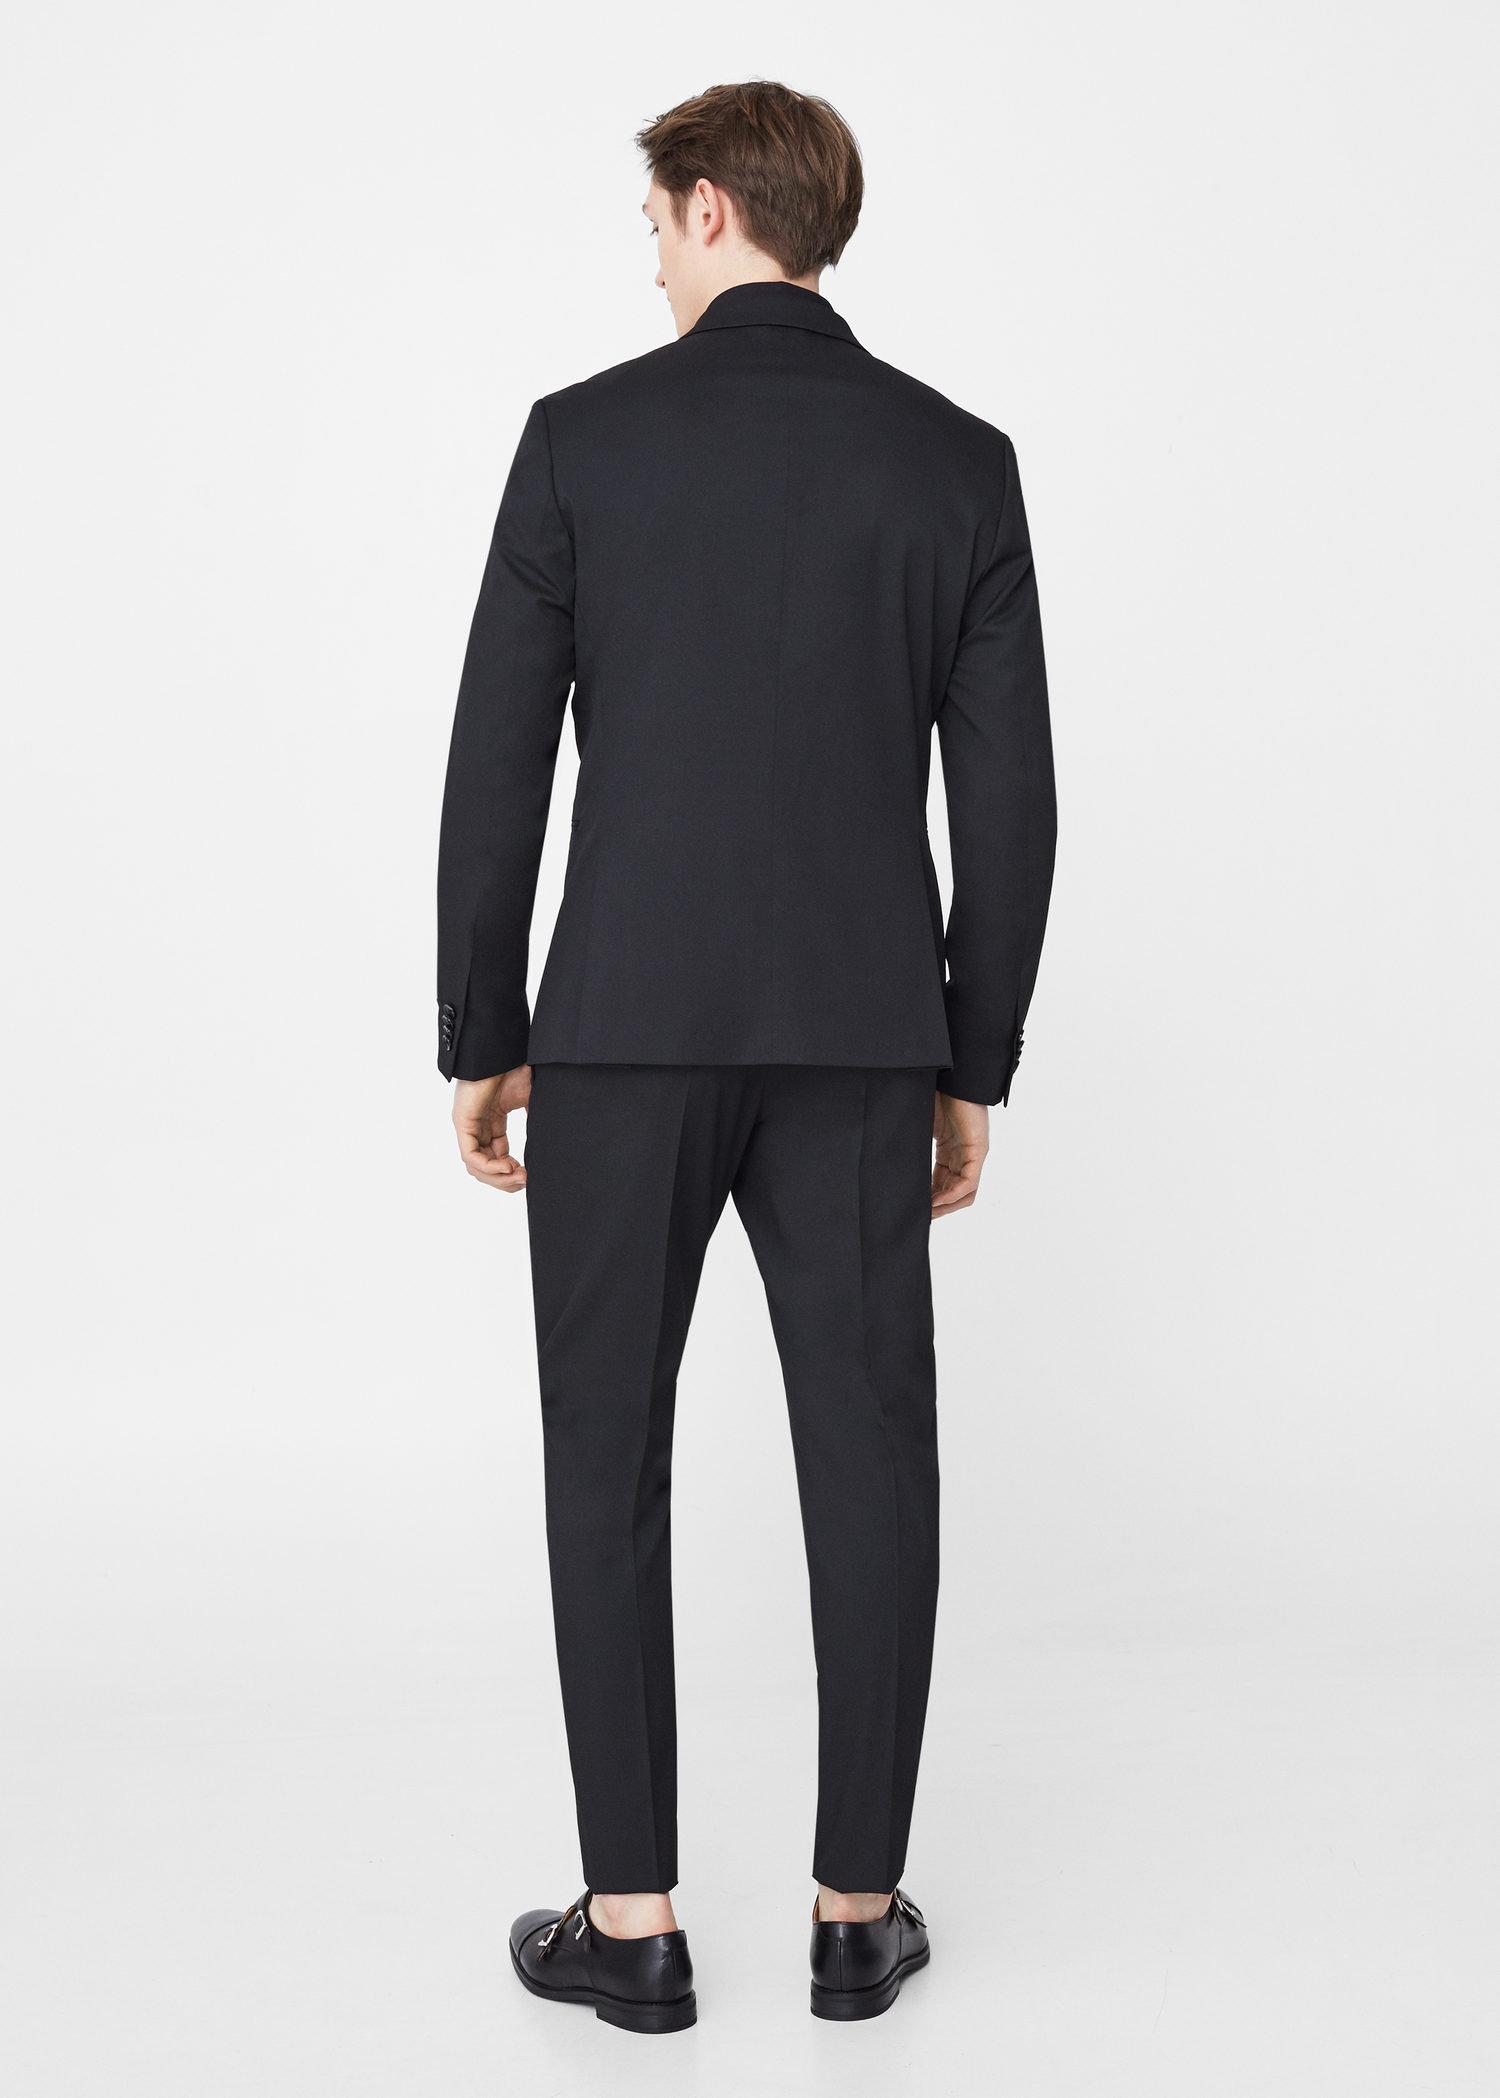 Lyst - Mango Modern Slim-fit Suit Blazer in Black for Men